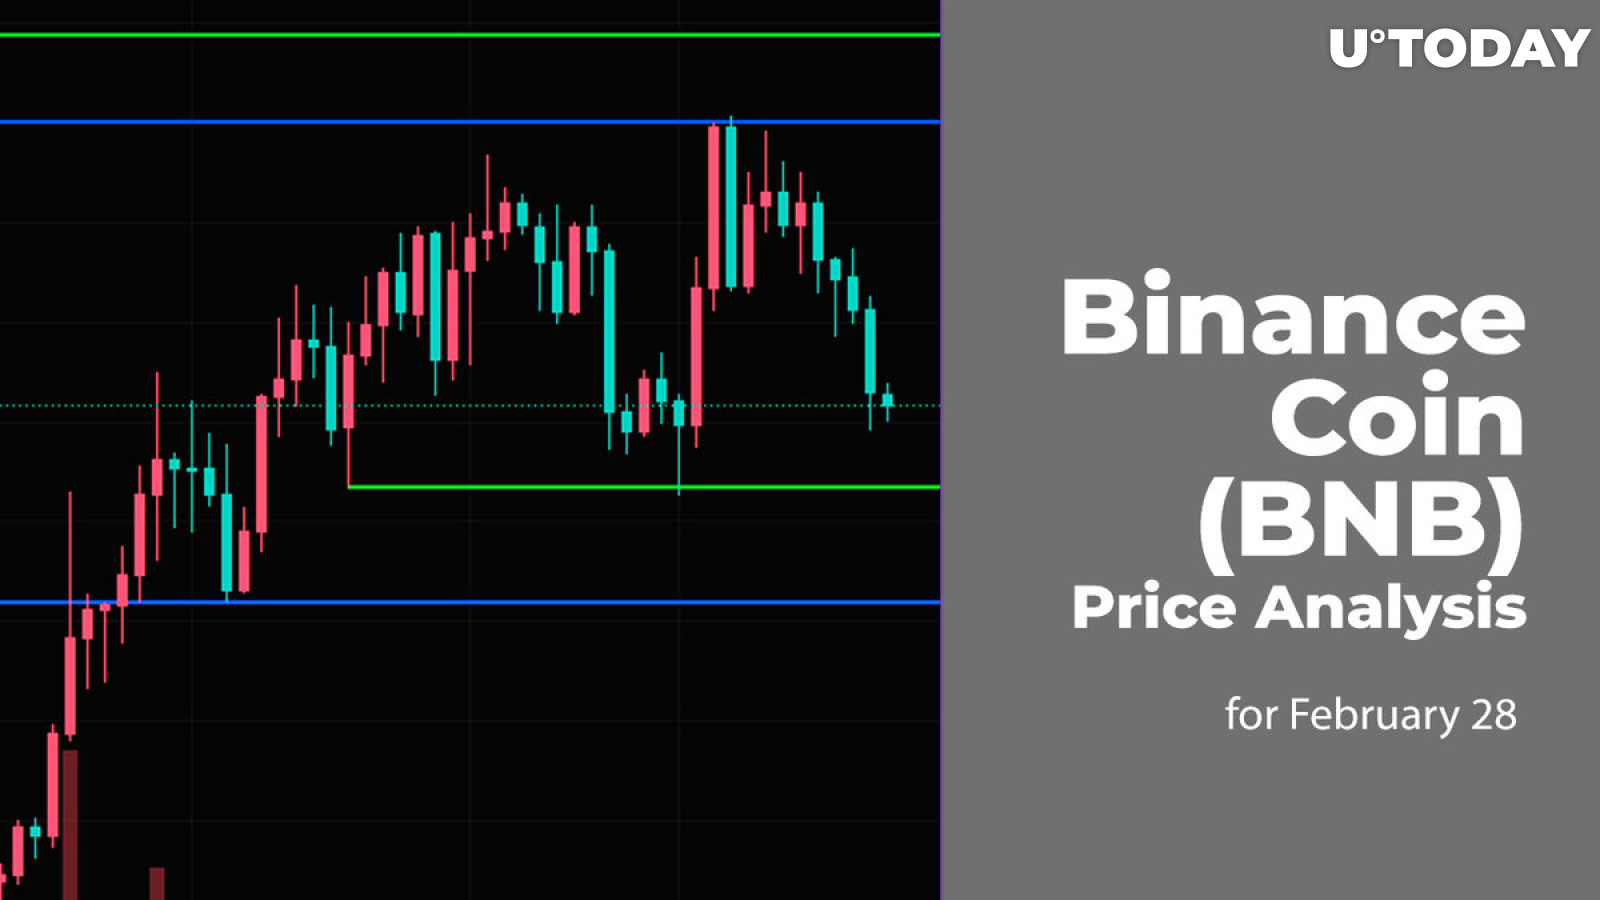 Binance Coin (BNB) Price Analysis for February 28